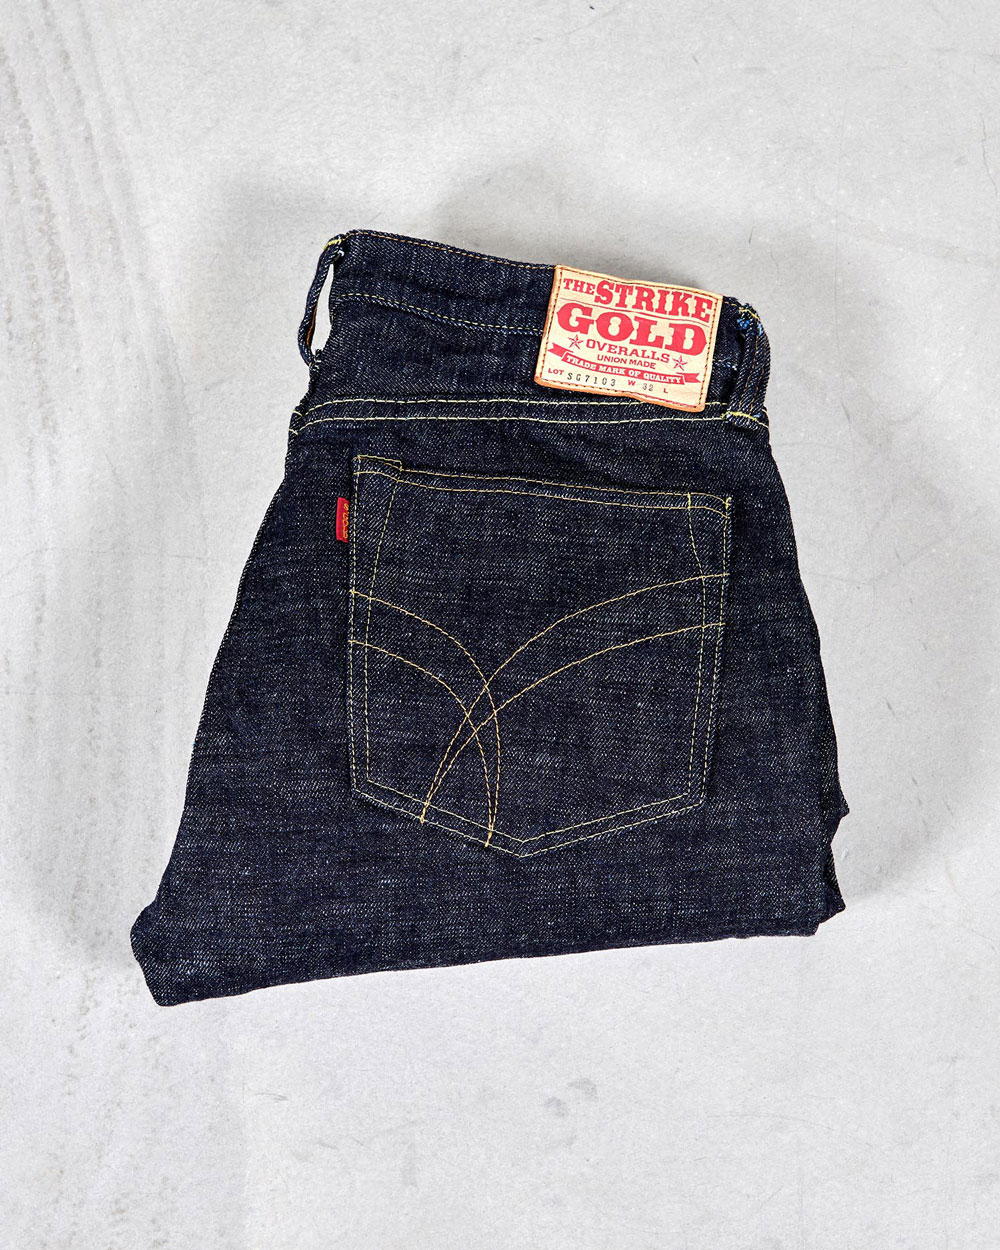 The Strike Gold 7103 17oz Super Slubby Straight Jeans